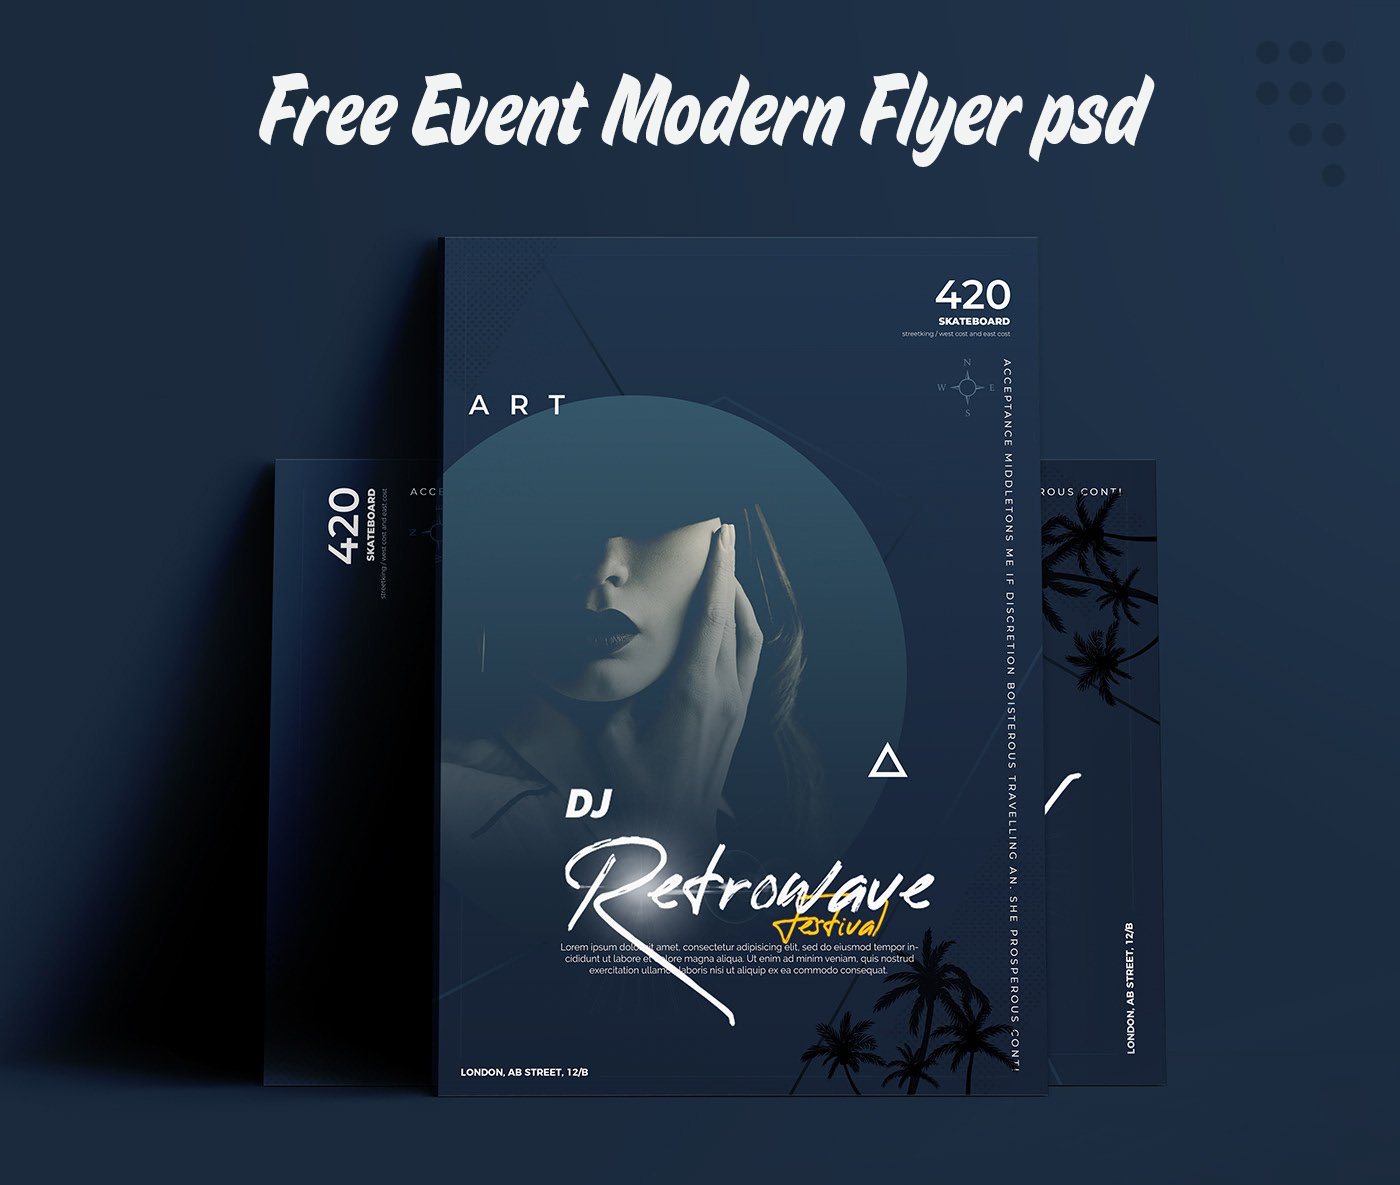 Free Event Modern Flyer скачать